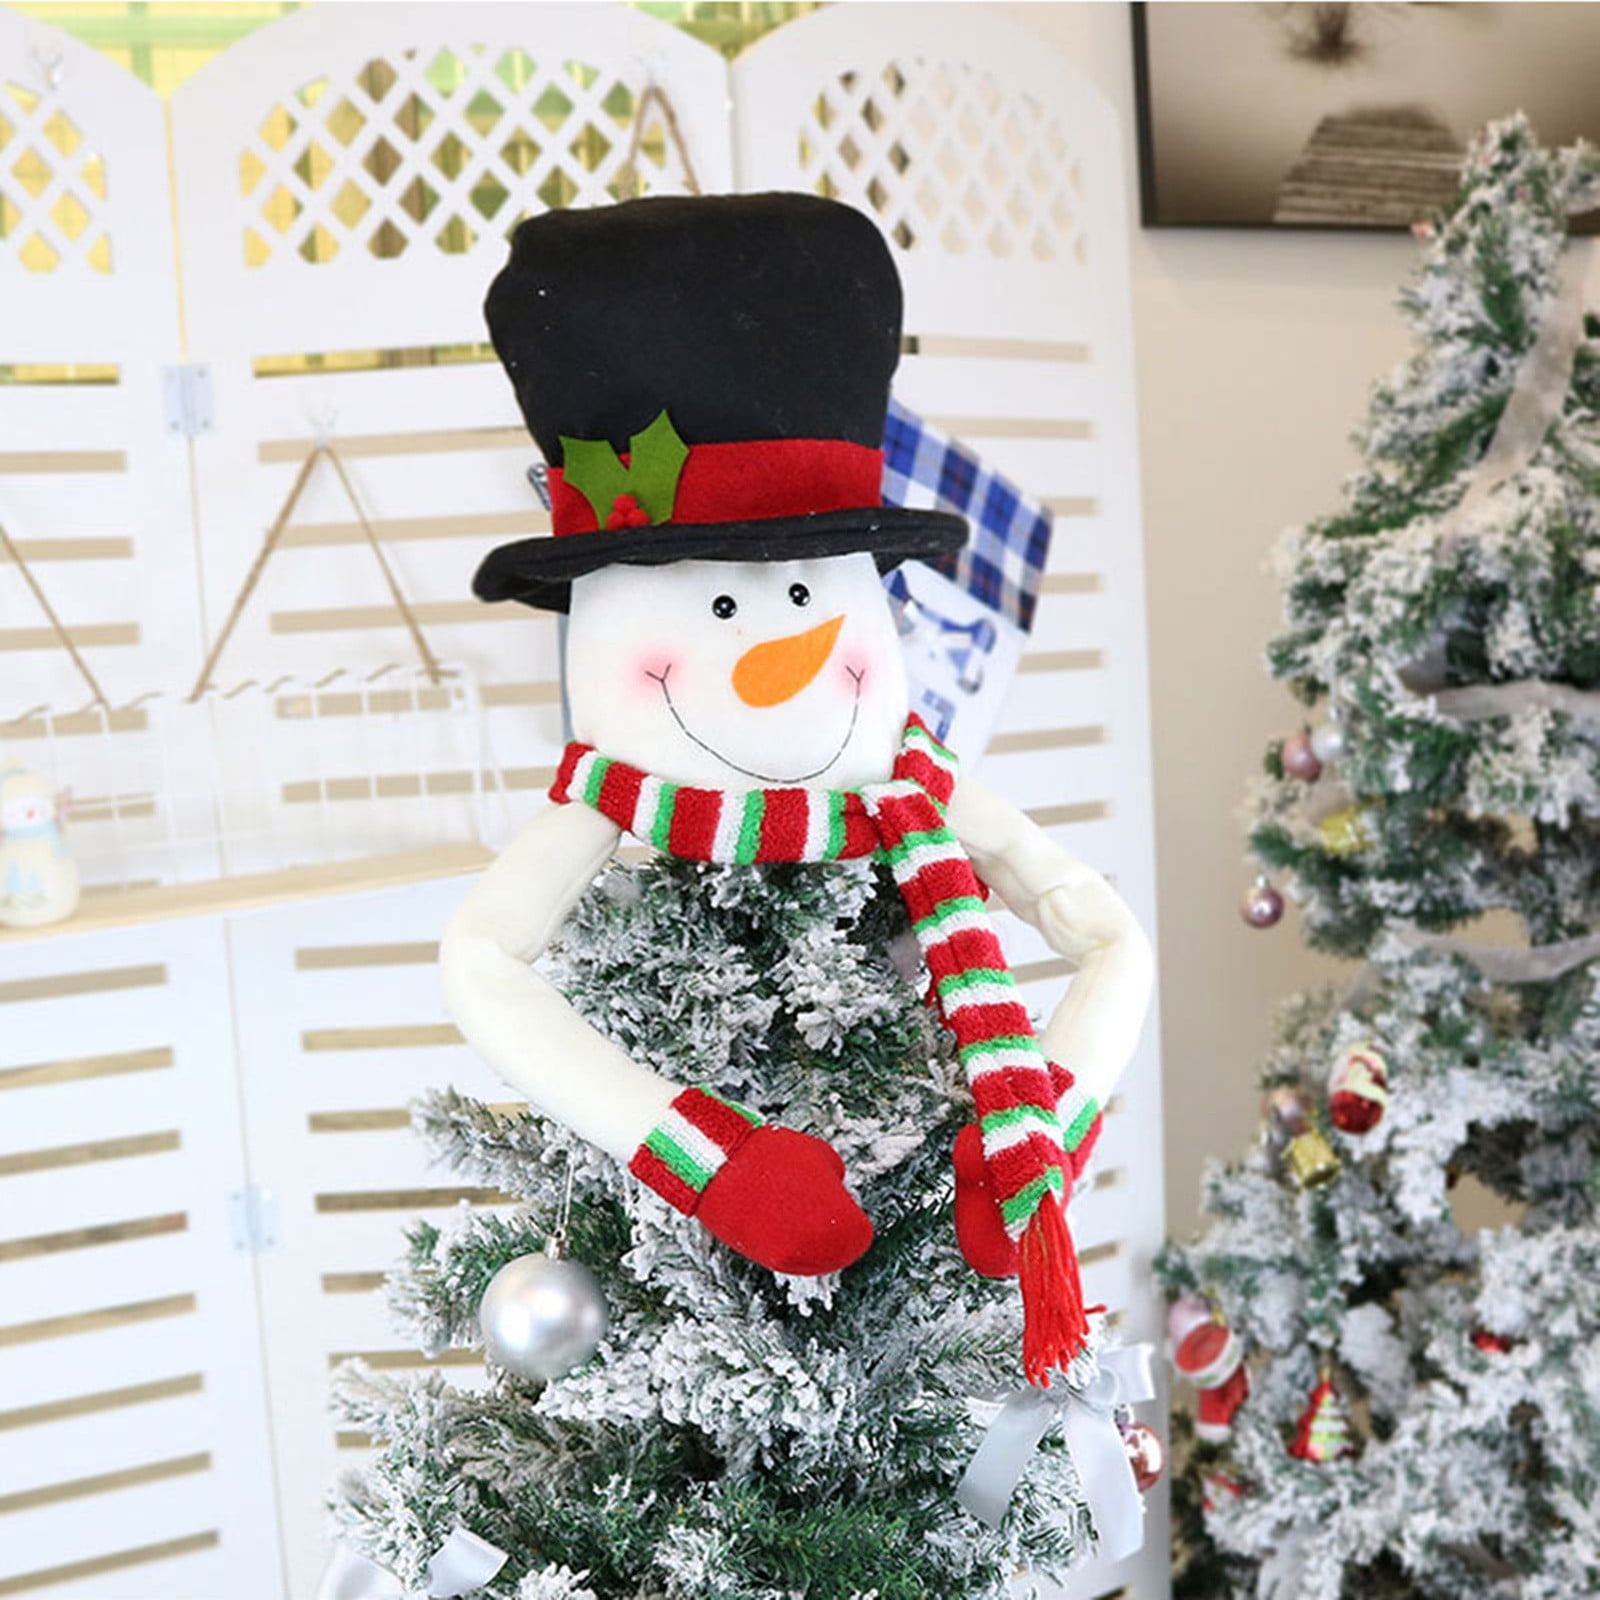 Usmixi Clearance Sale Christmas Tree Decoration, Premium Snow